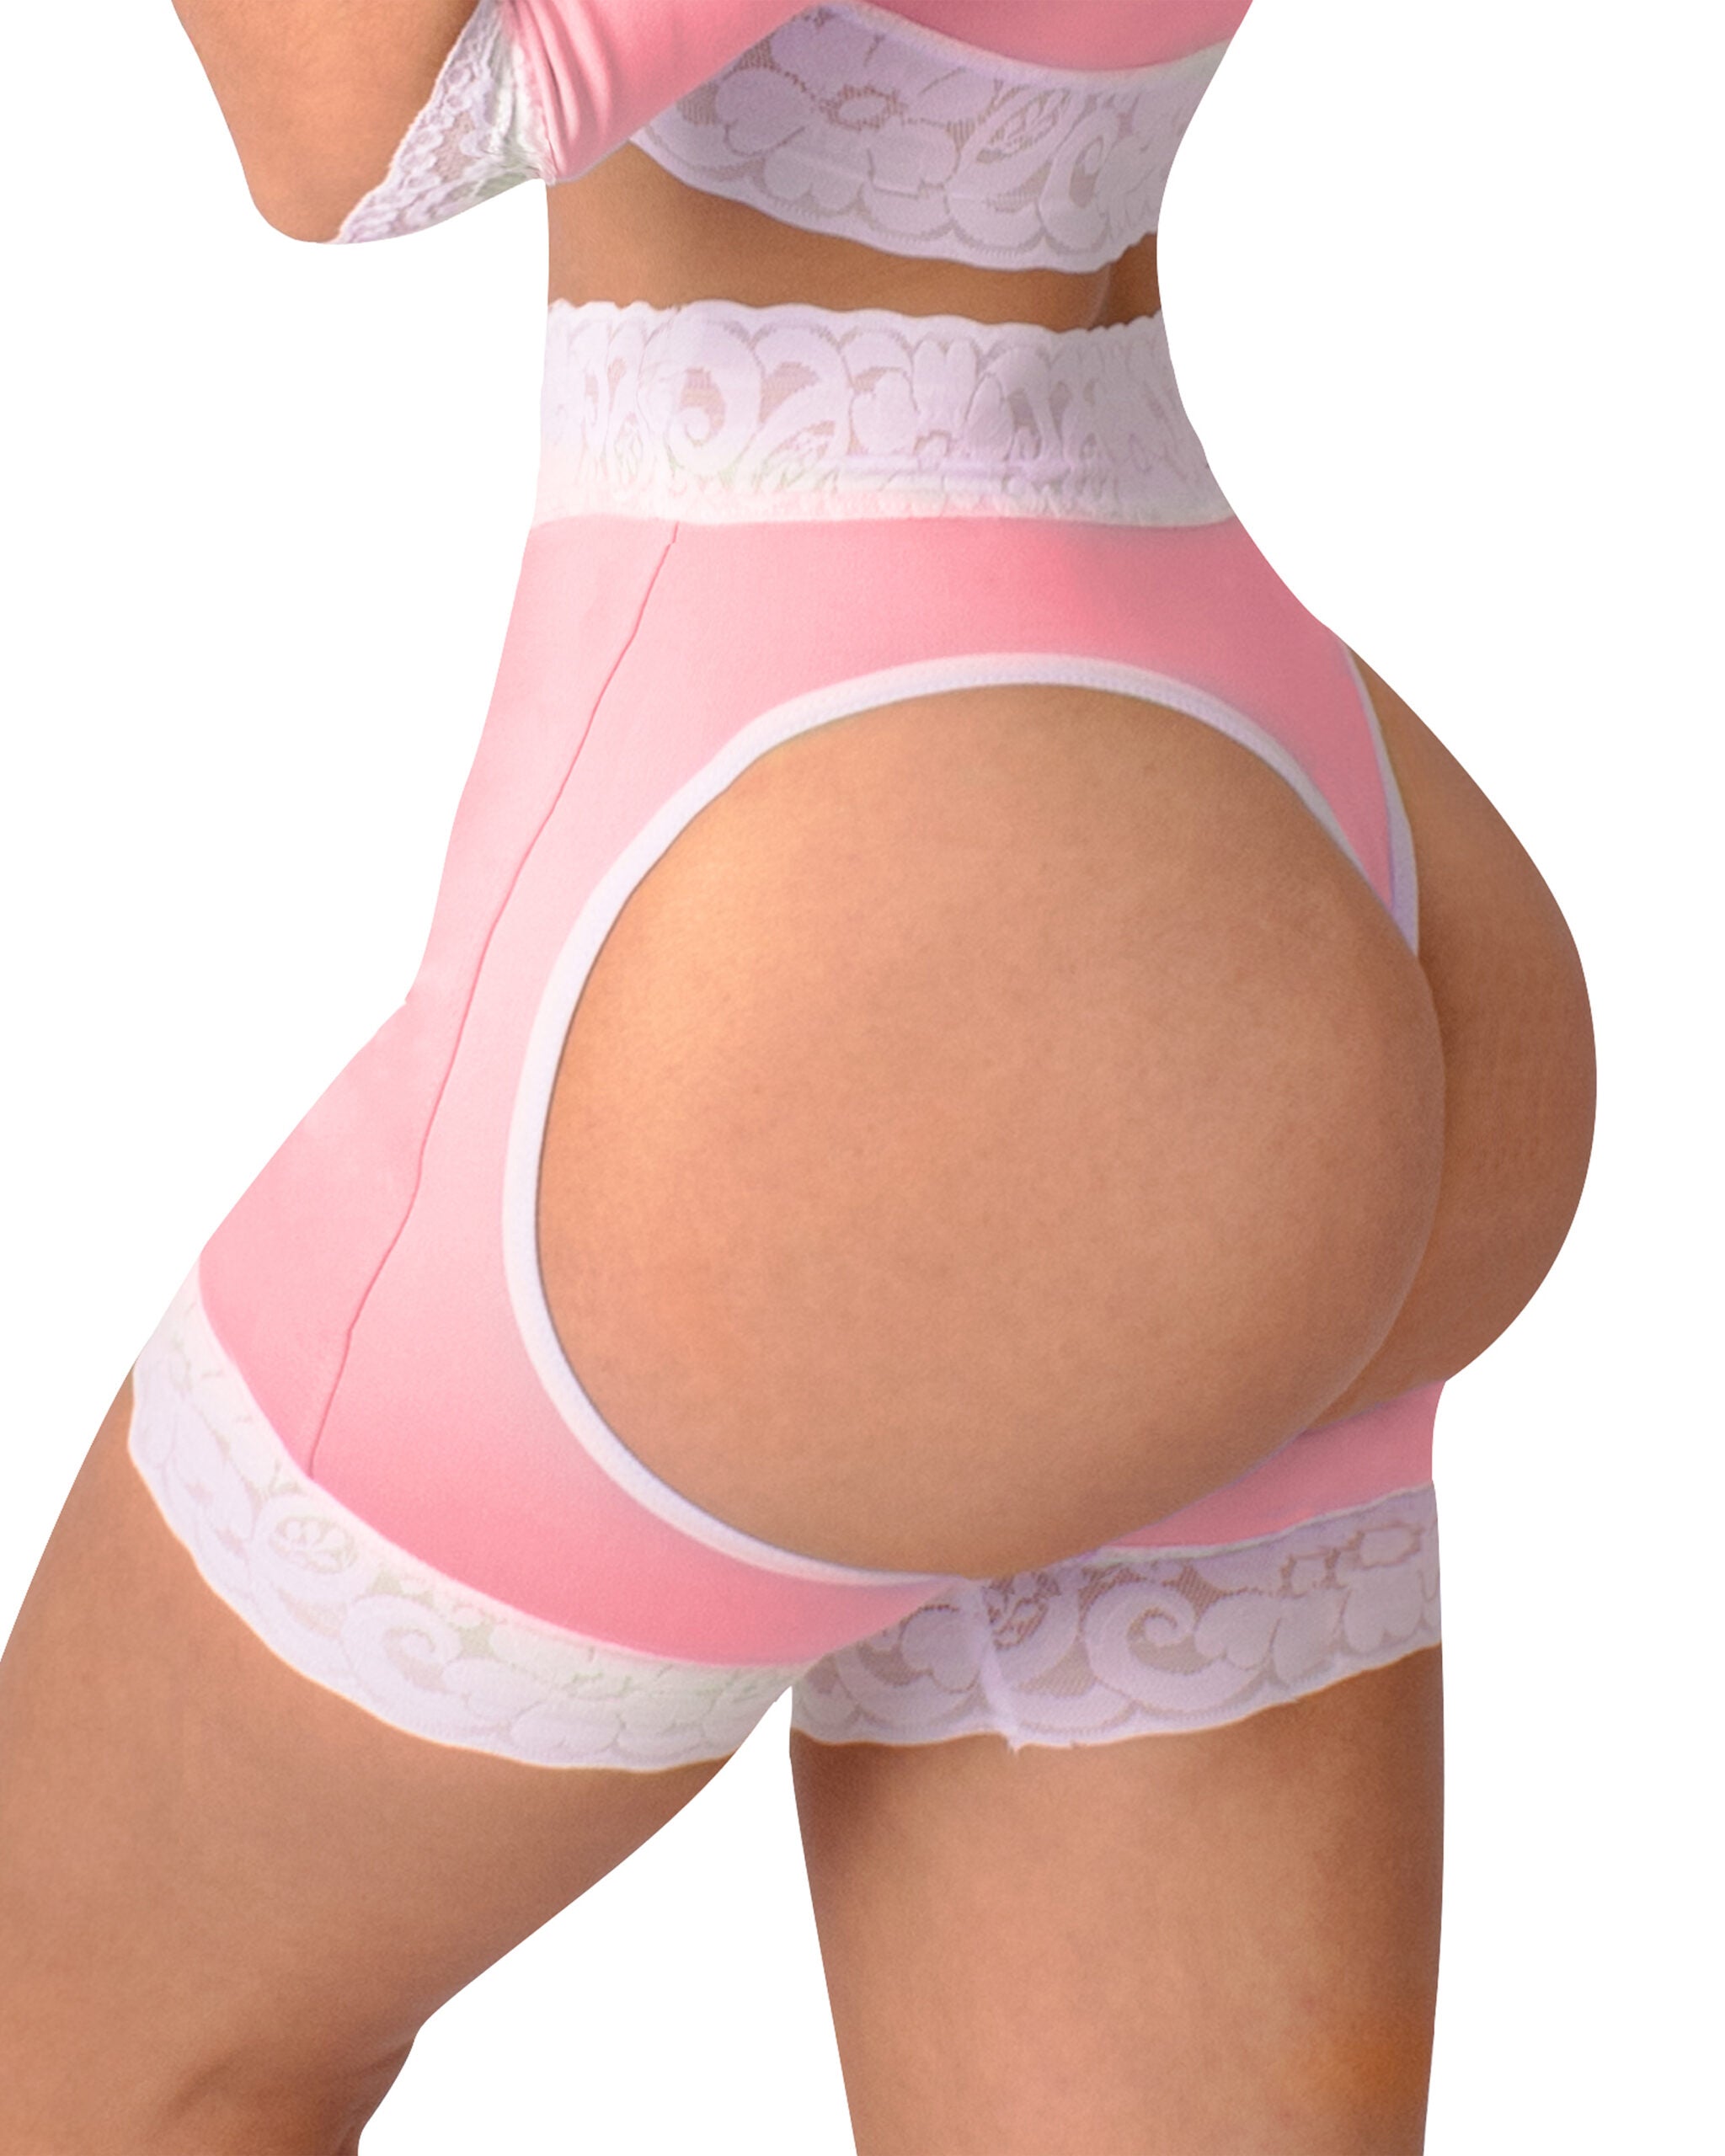 Sexy Hourglass Figure Butt Lifter Shaping Panties